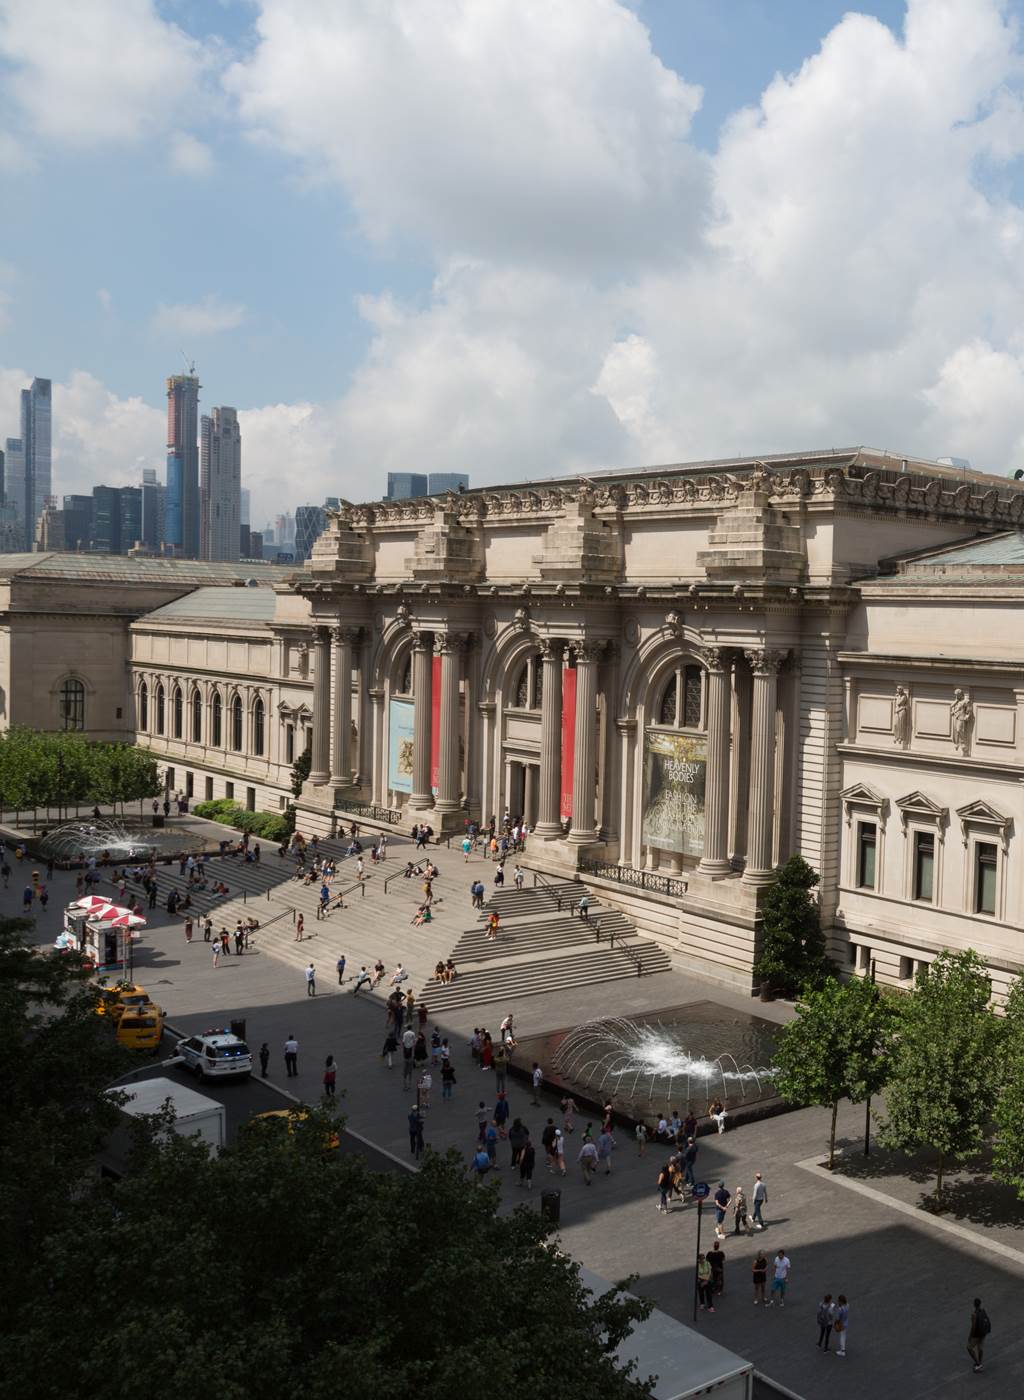 The Metropolitan Museum of Art at 1000 5th Ave